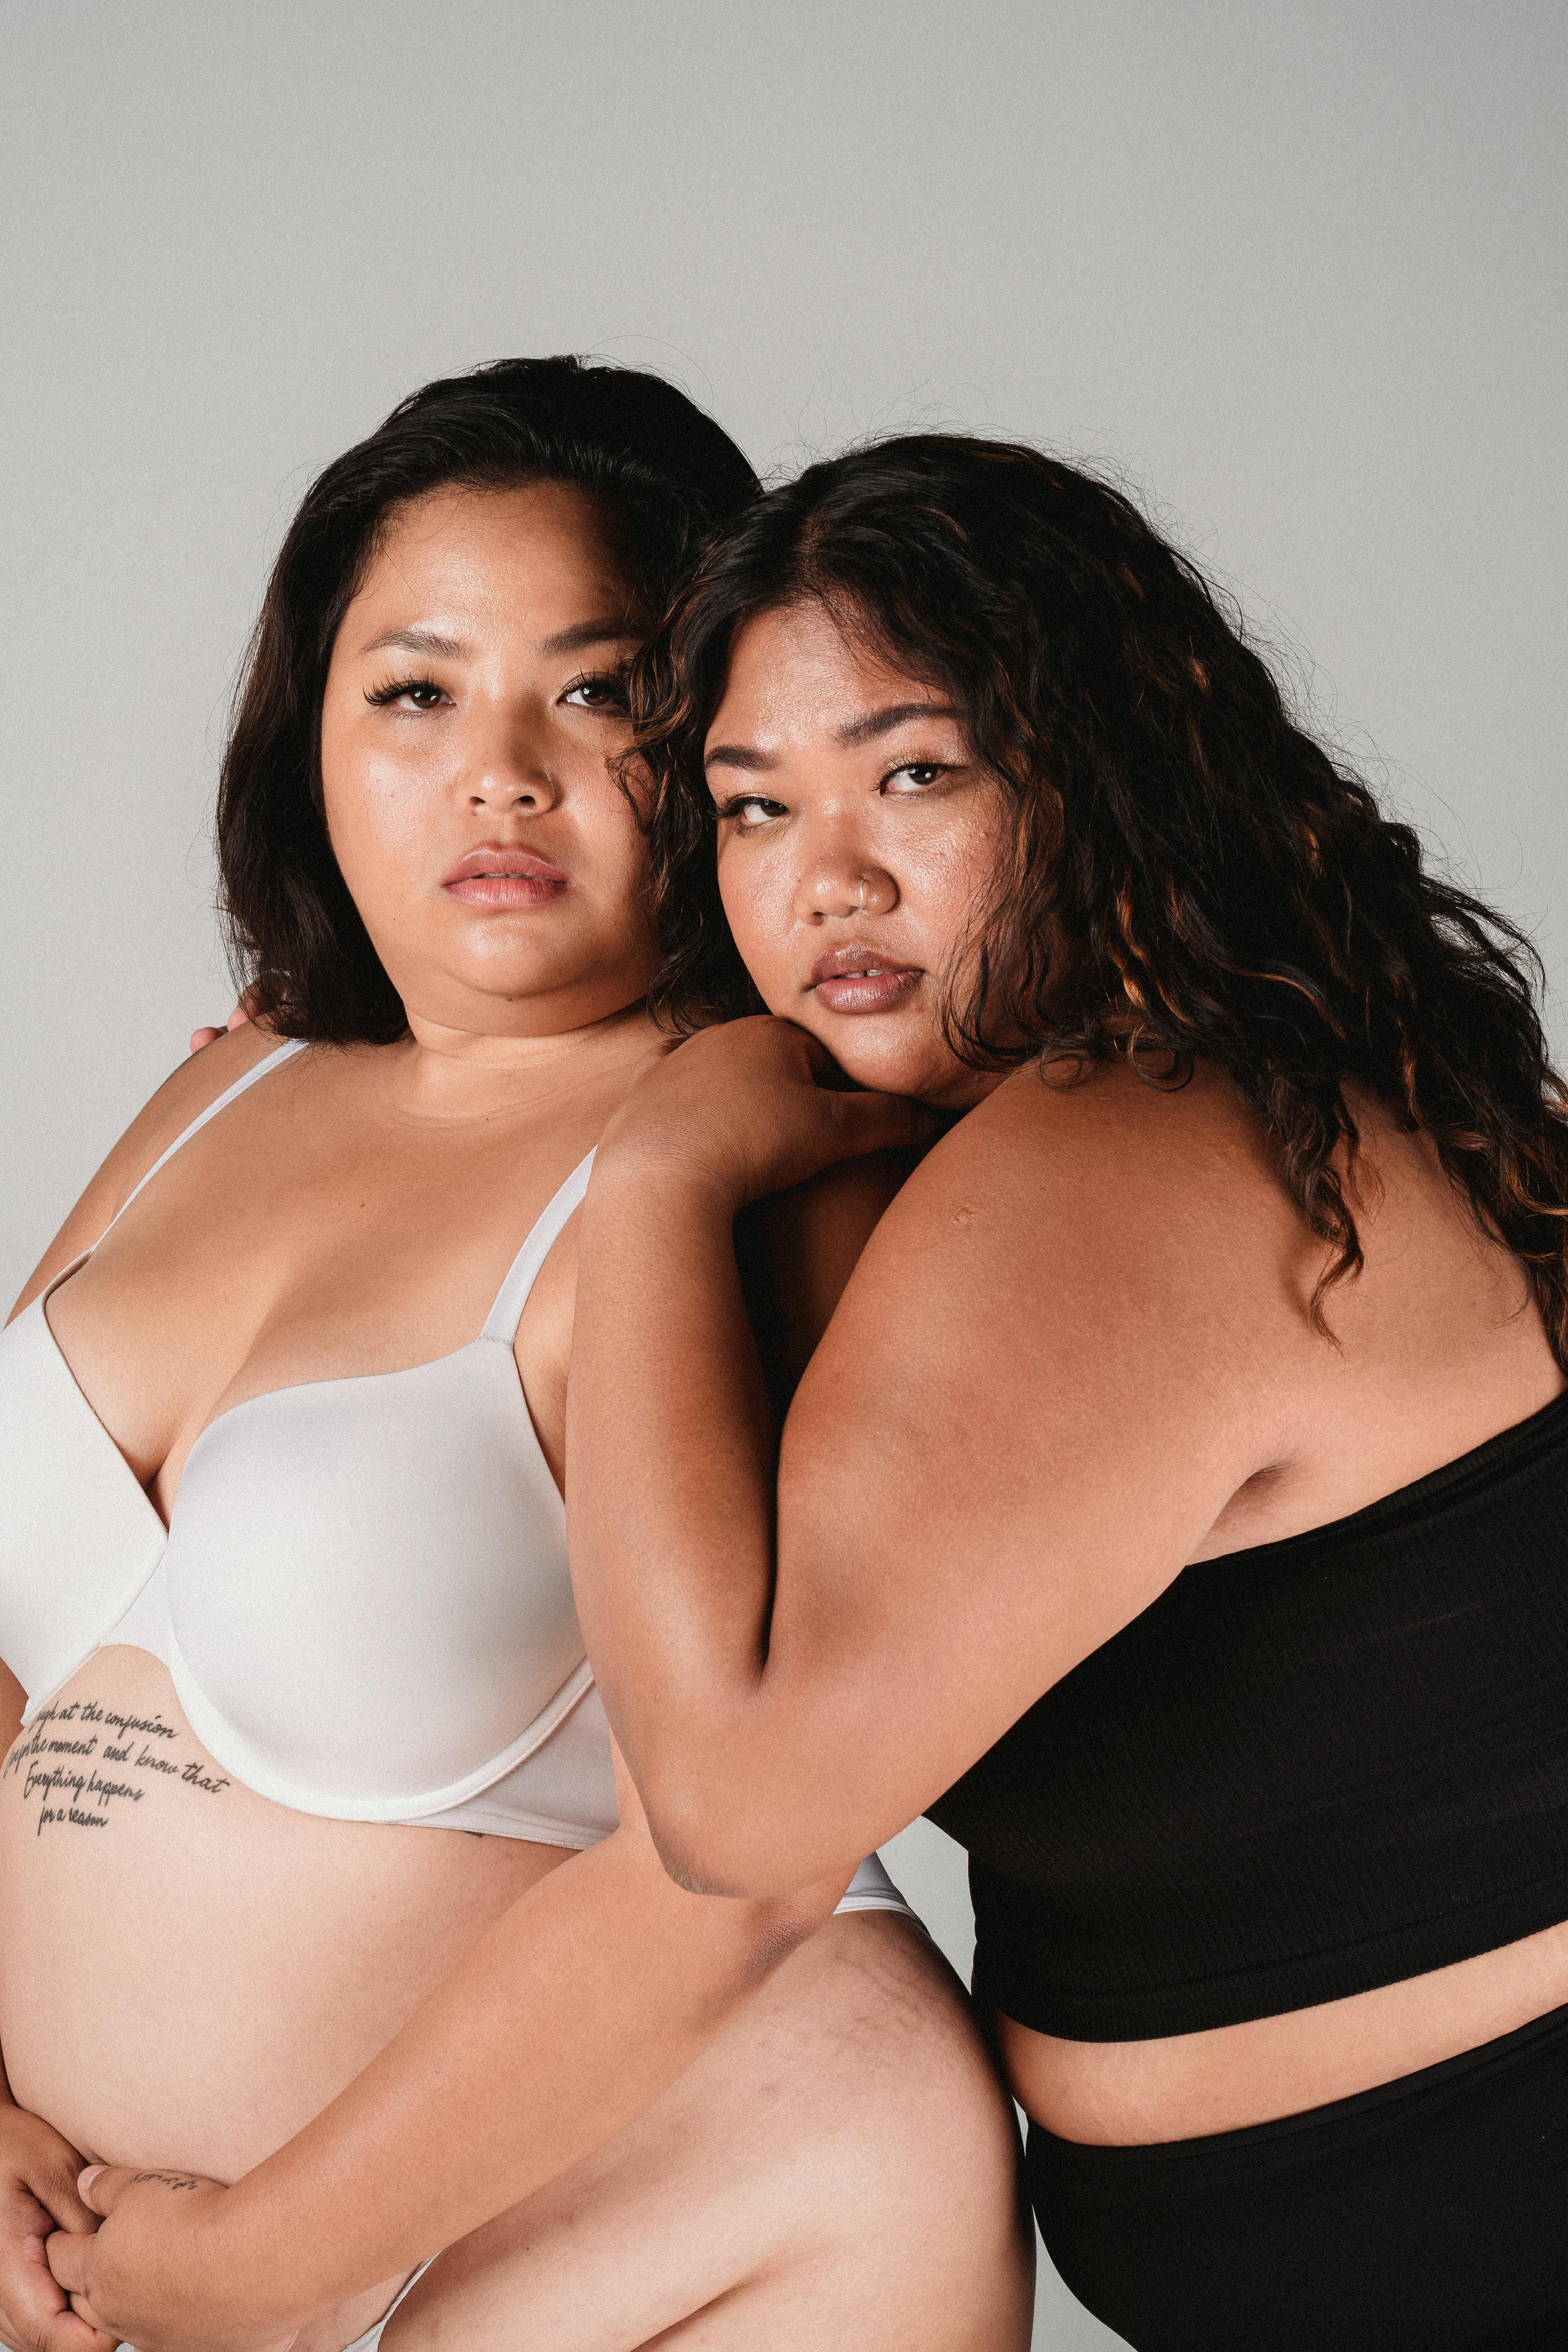 Seductive plus size women in underwear · Free Stock Photo